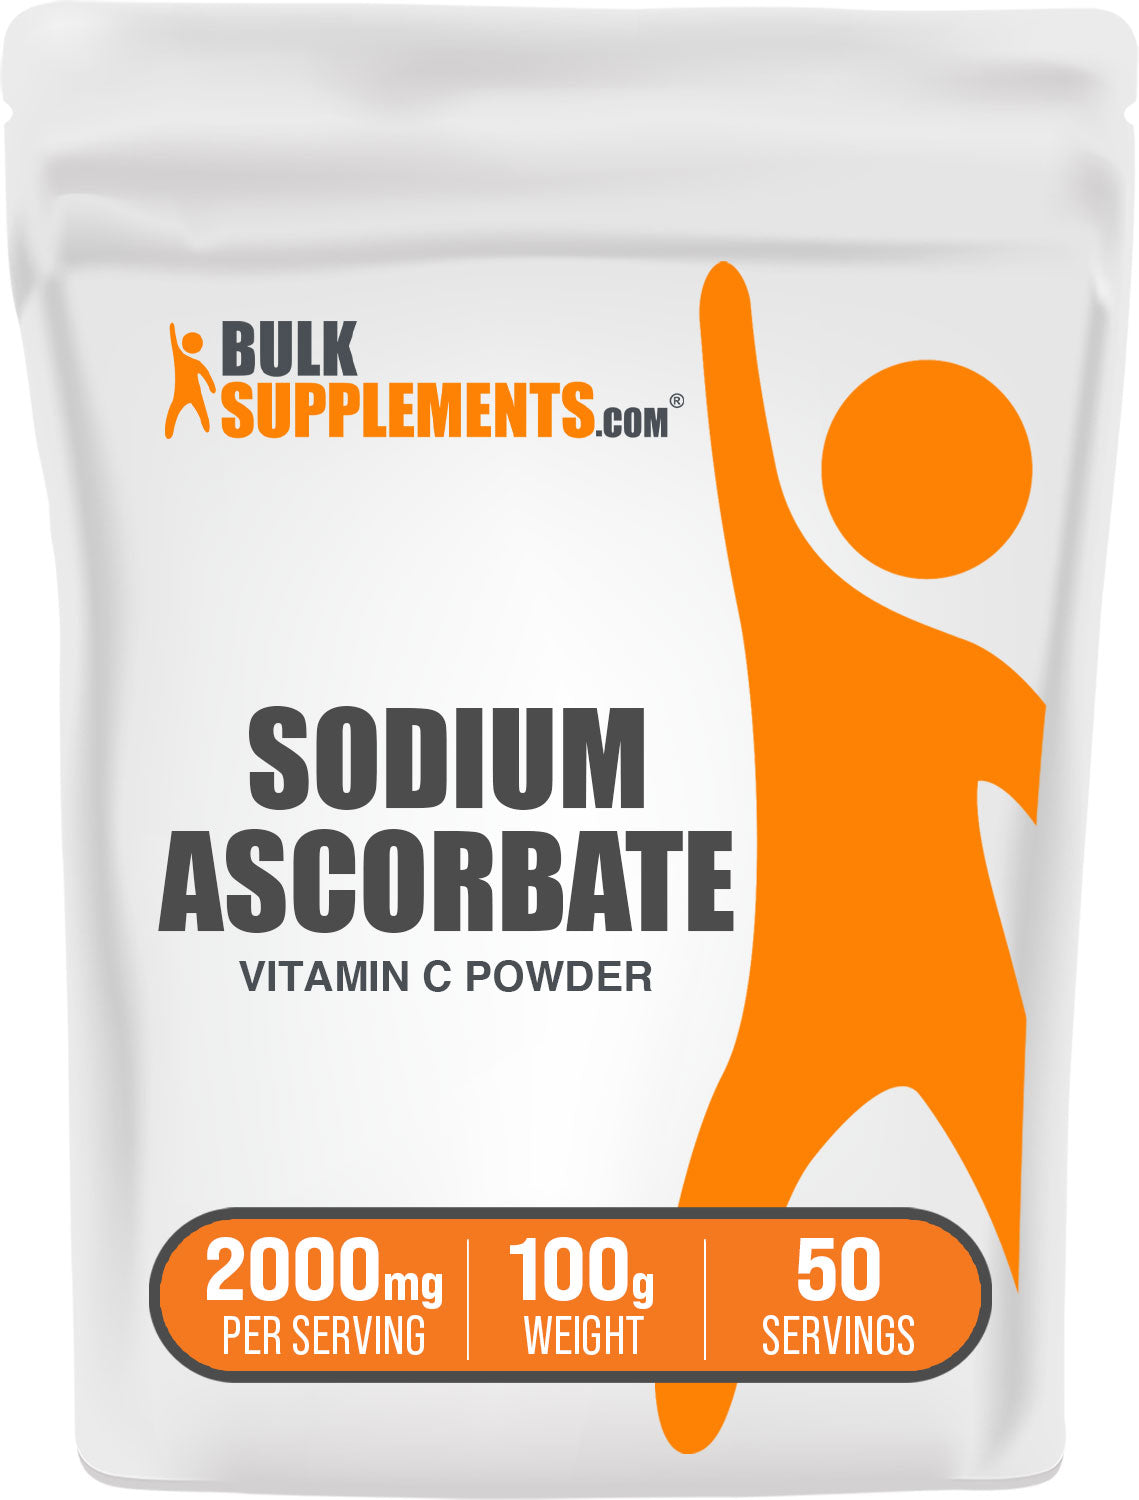 BulkSupplements Sodium Ascorbate Vitamin C Powder 100g bag